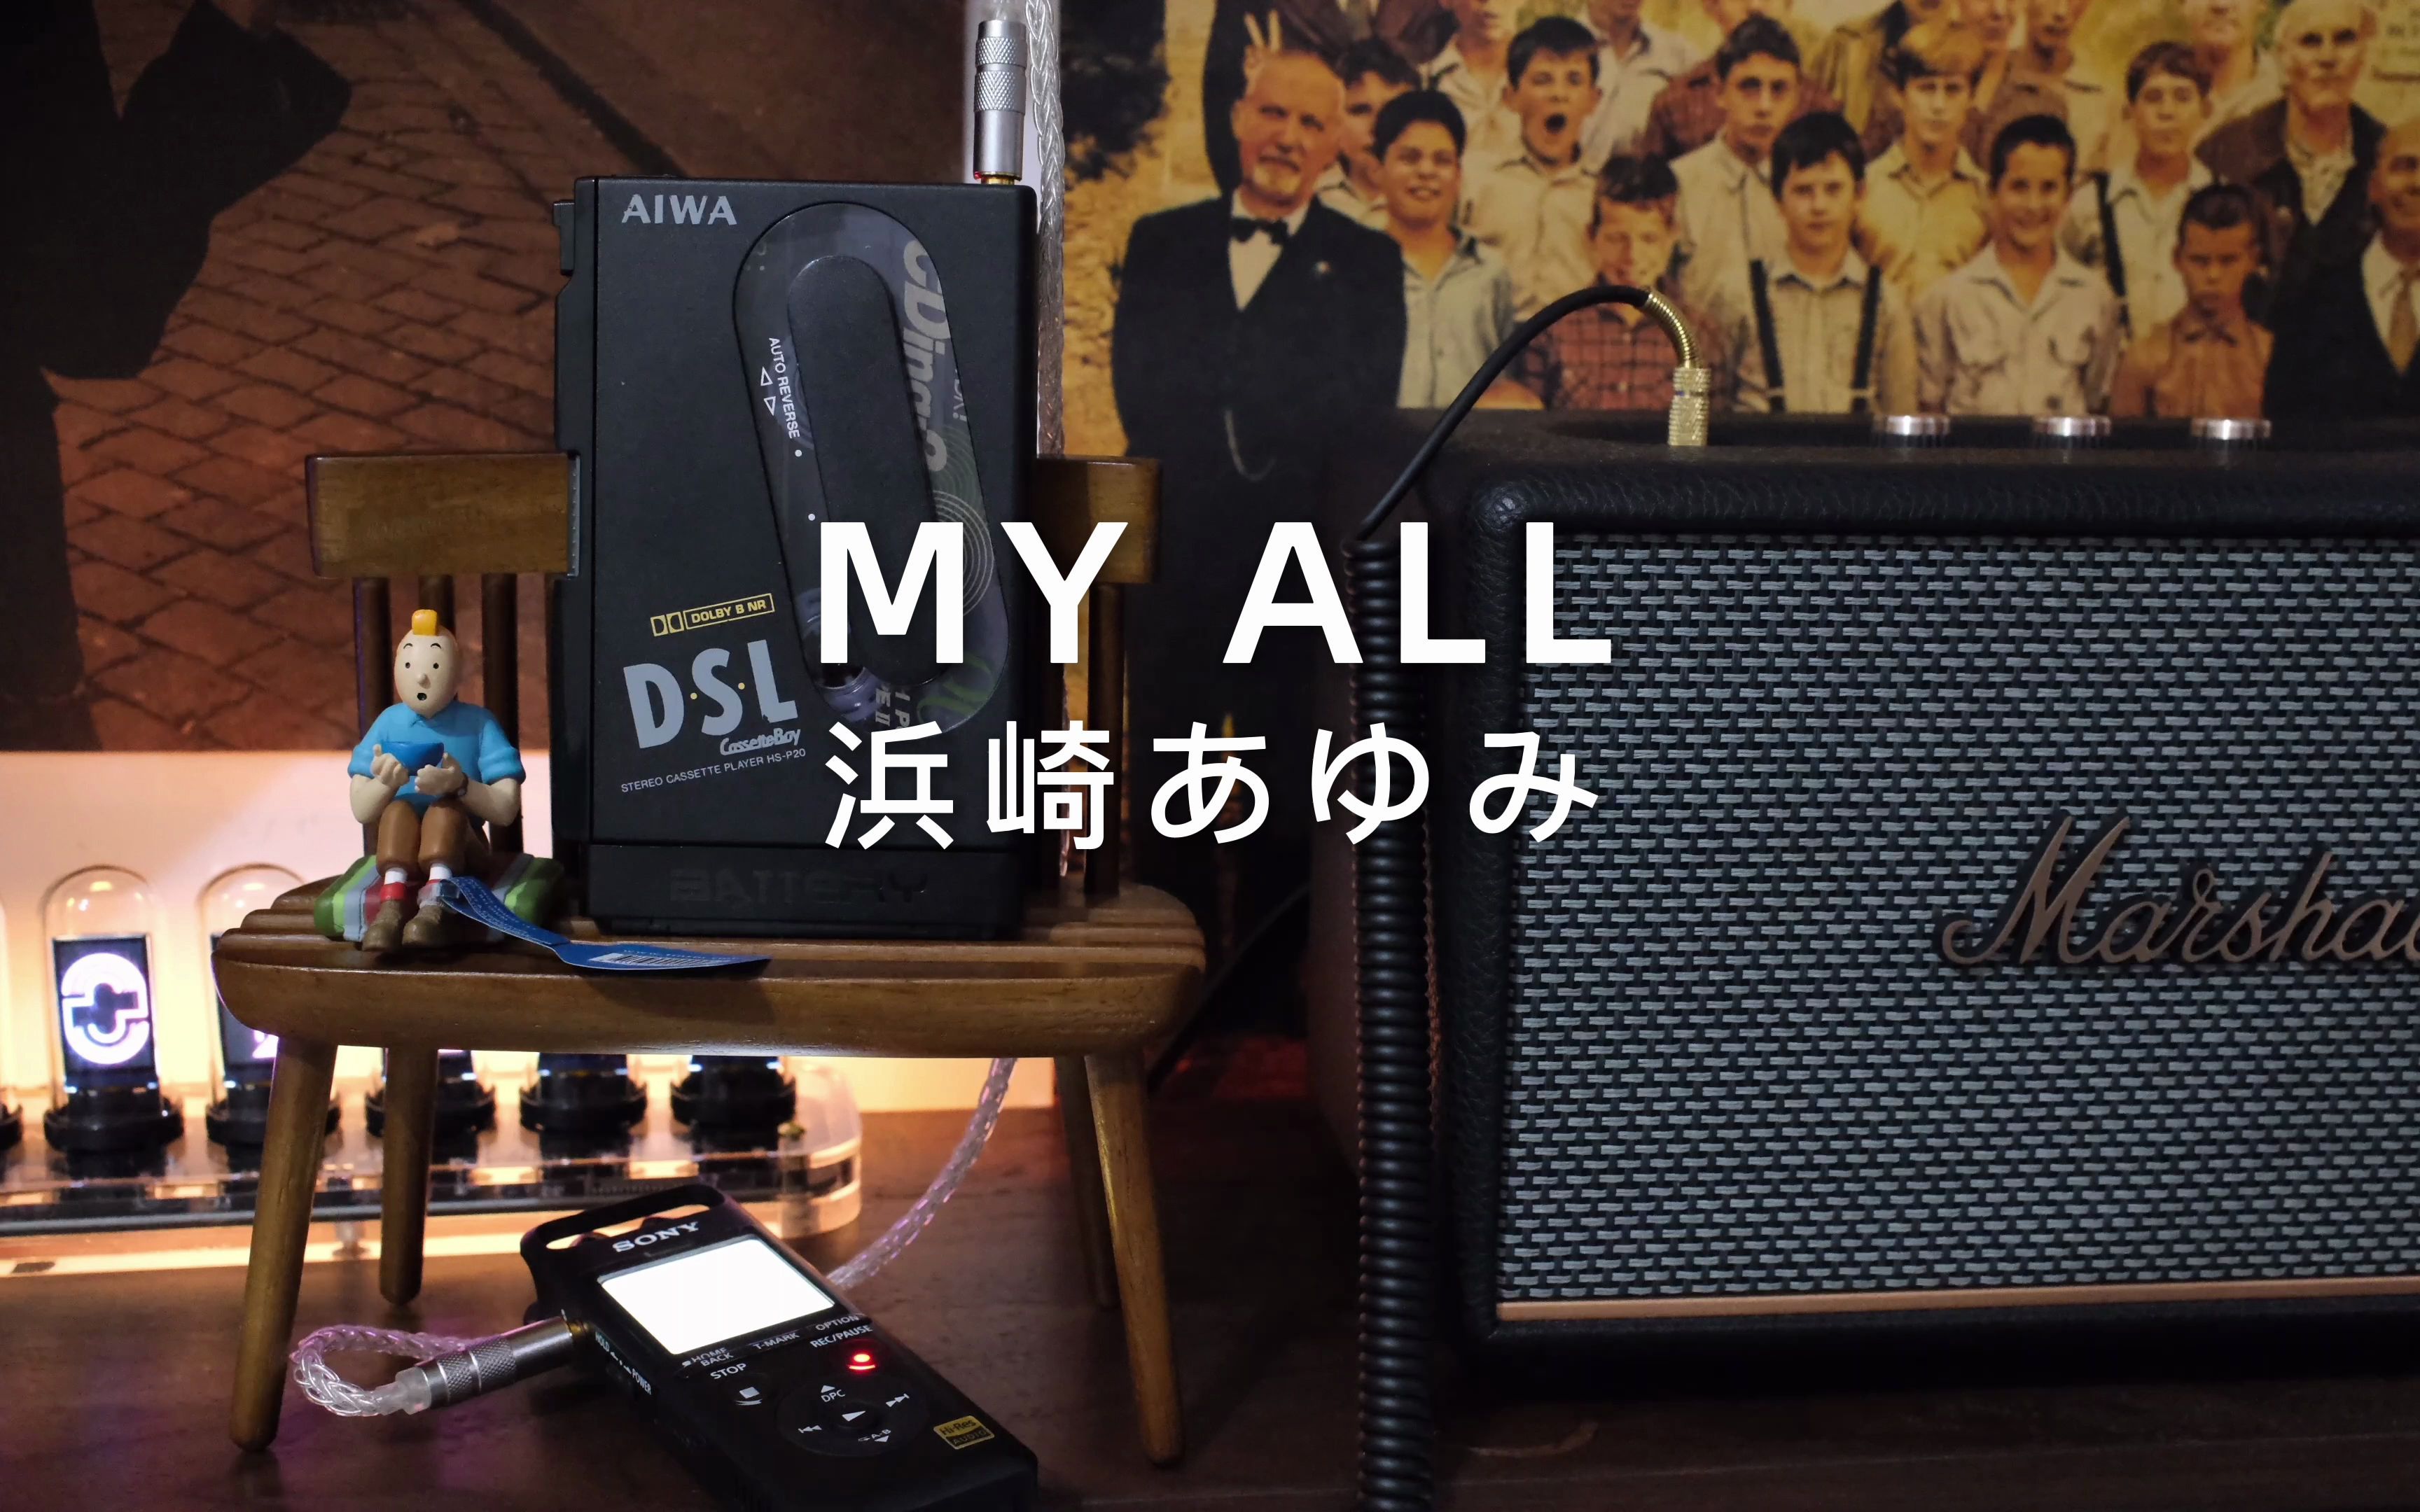 AIWA HS-P20 磁带机试听滨崎步《MY ALL》-哔哩哔哩